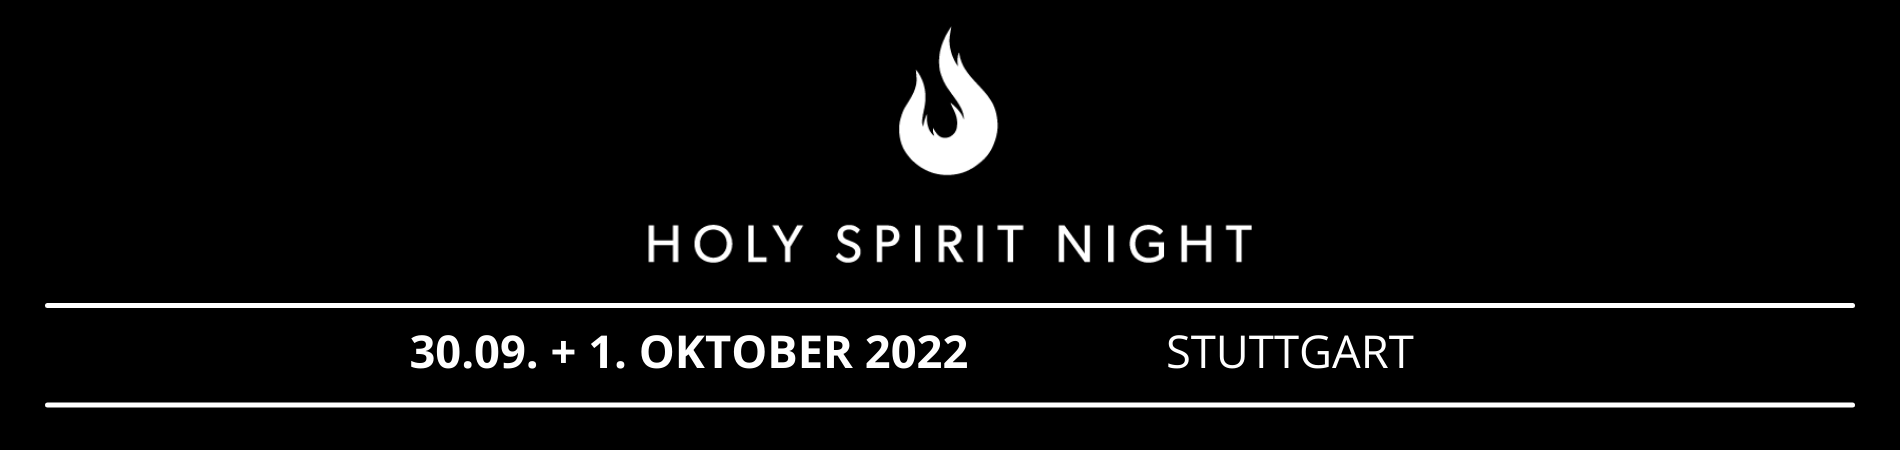 Holy Spirit Night | Oktober 2022